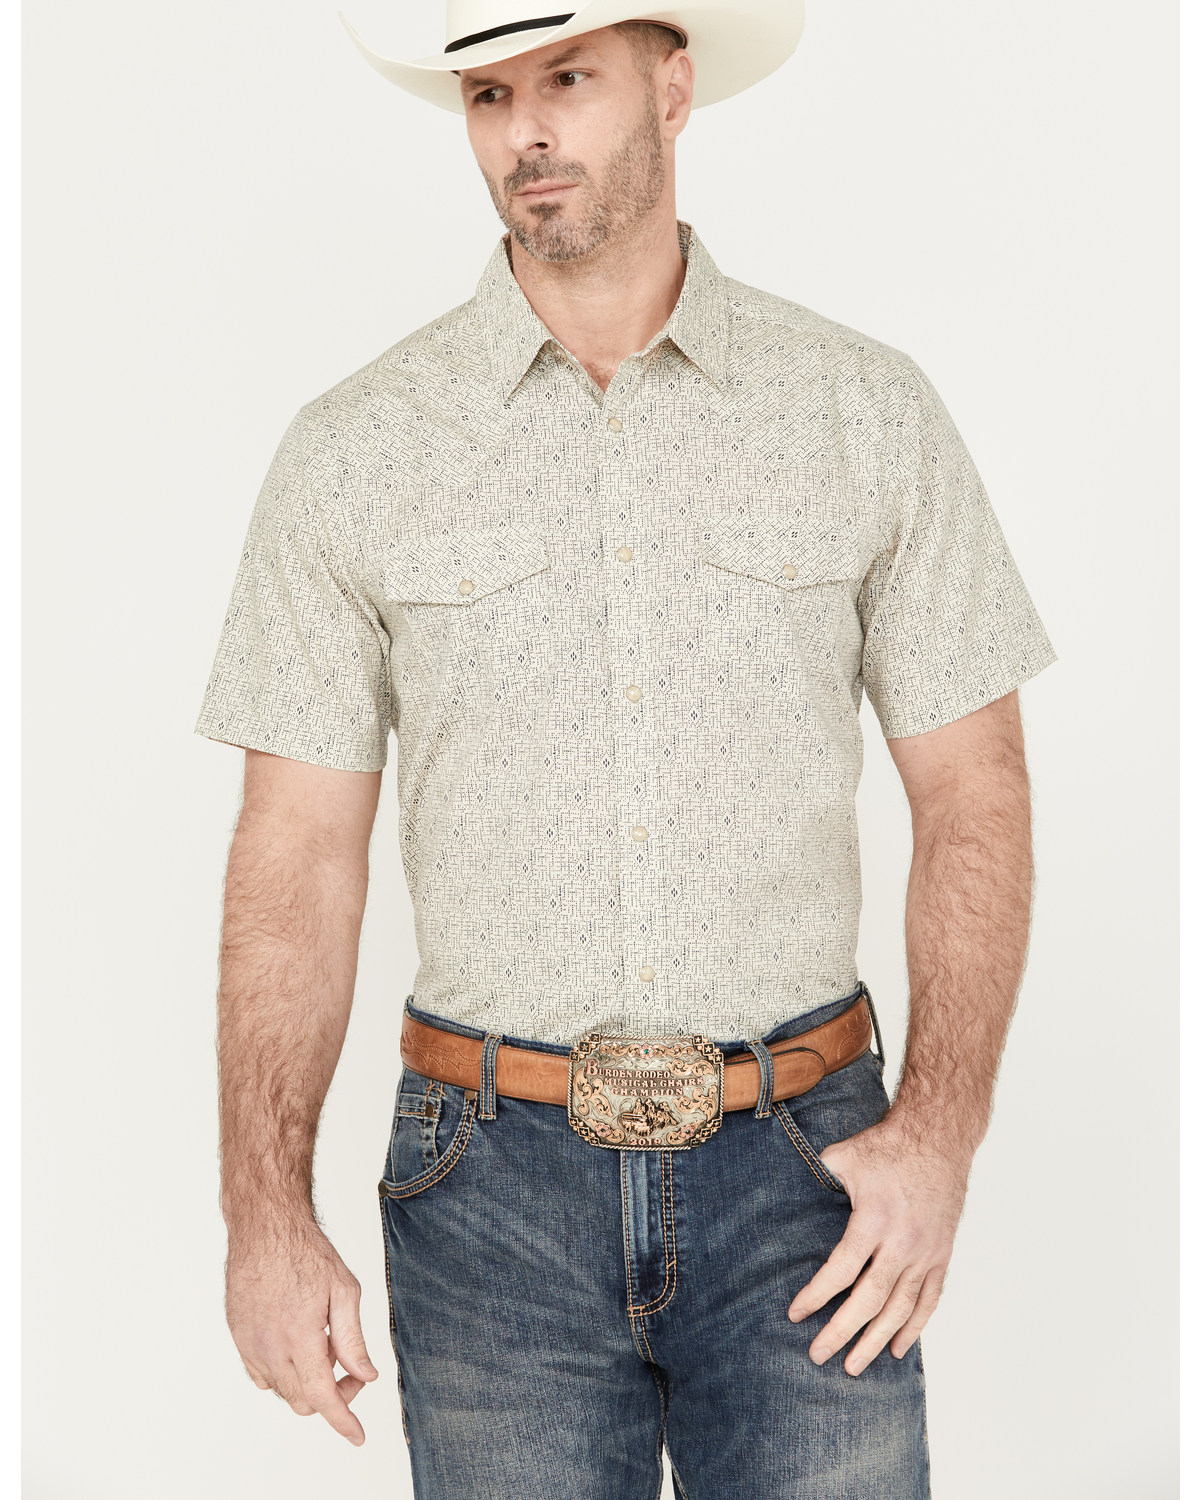 Gibson Trading Co. Men's Treasure Map Short Sleeve Western Pearl Snap Shirt